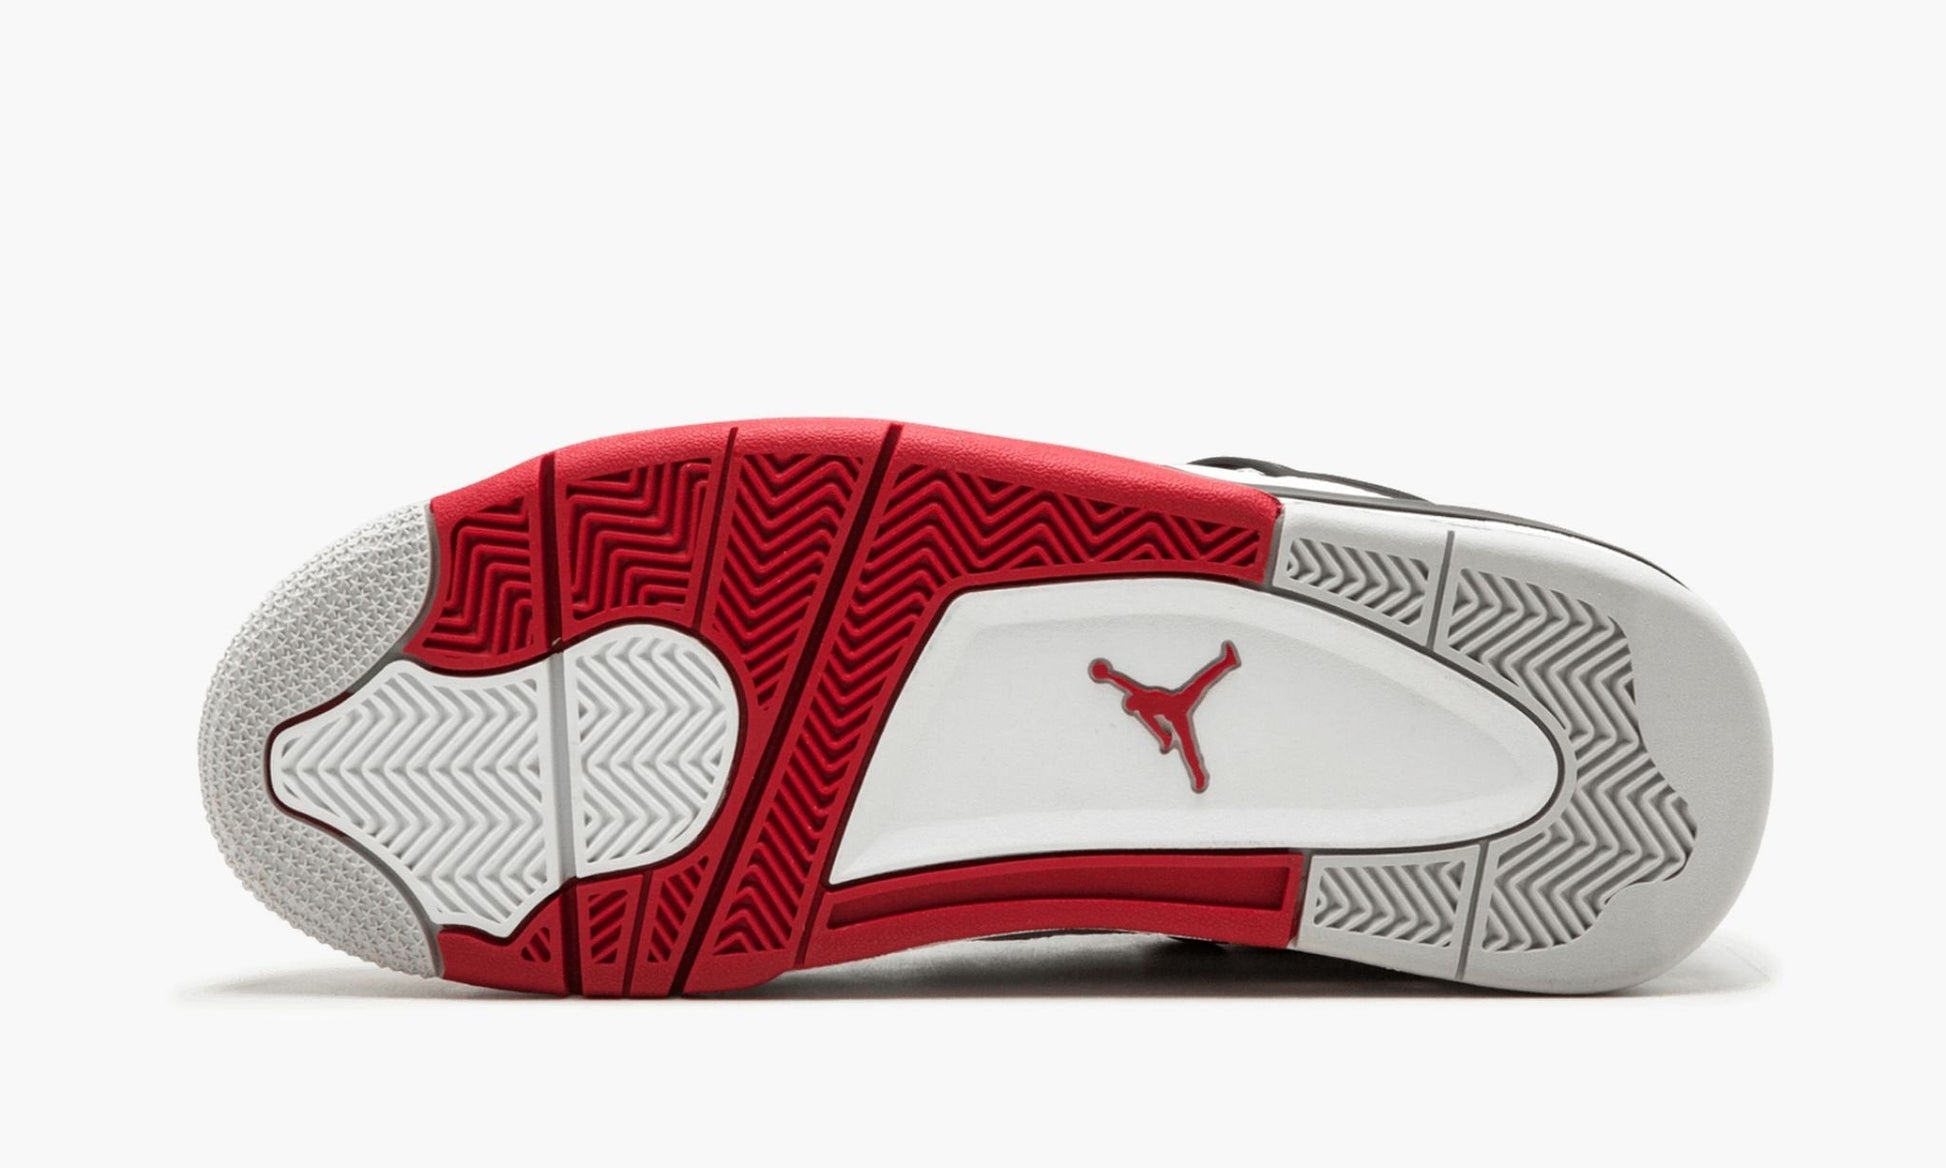 Air Jordan 4 Retro "Fire Red"